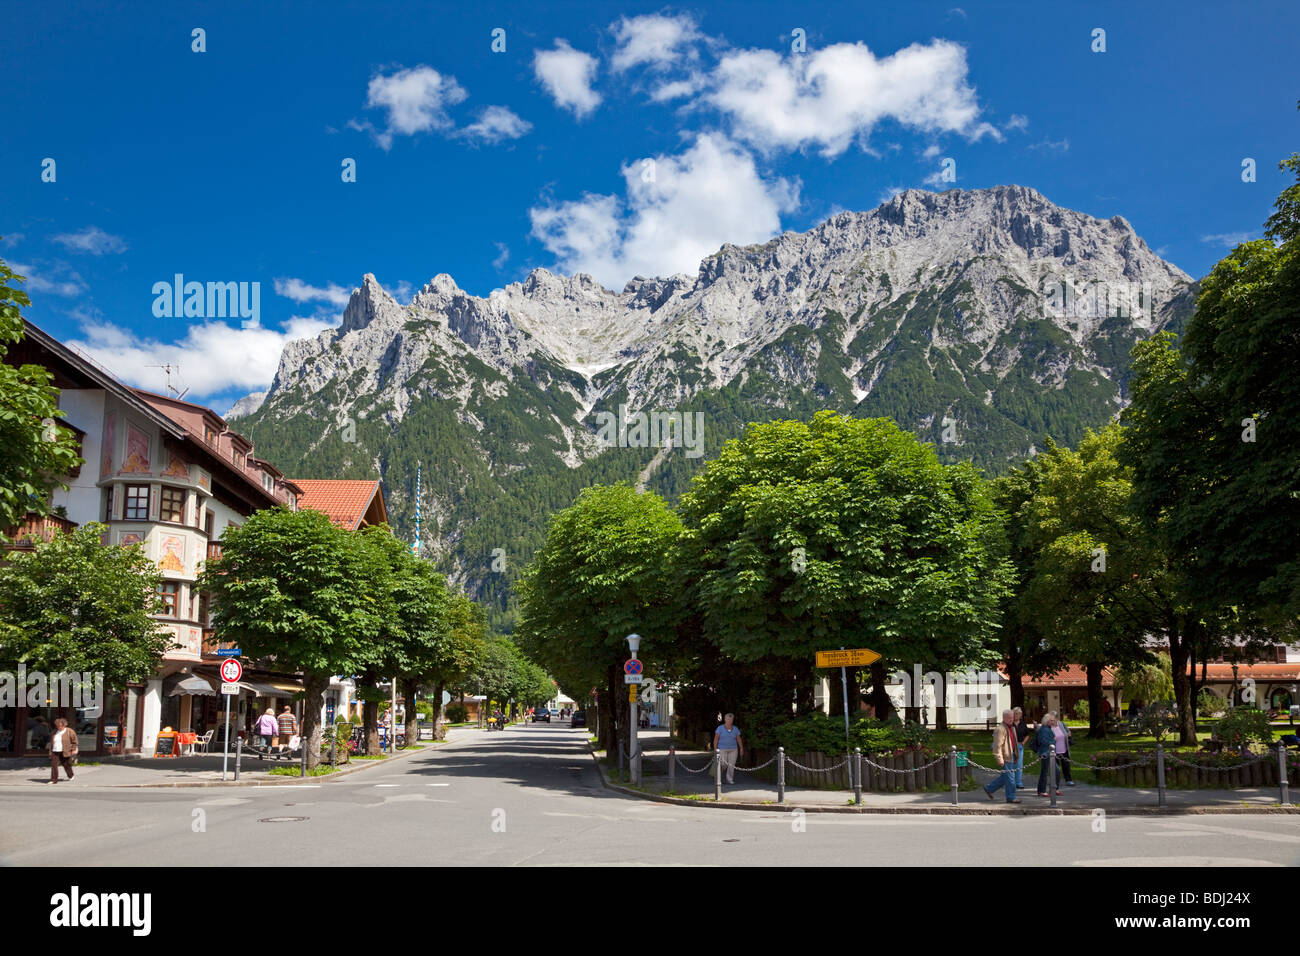 Alpi bavaresi - Mittenwald città e montagne Karwendel, Baviera, Germania in estate Foto Stock